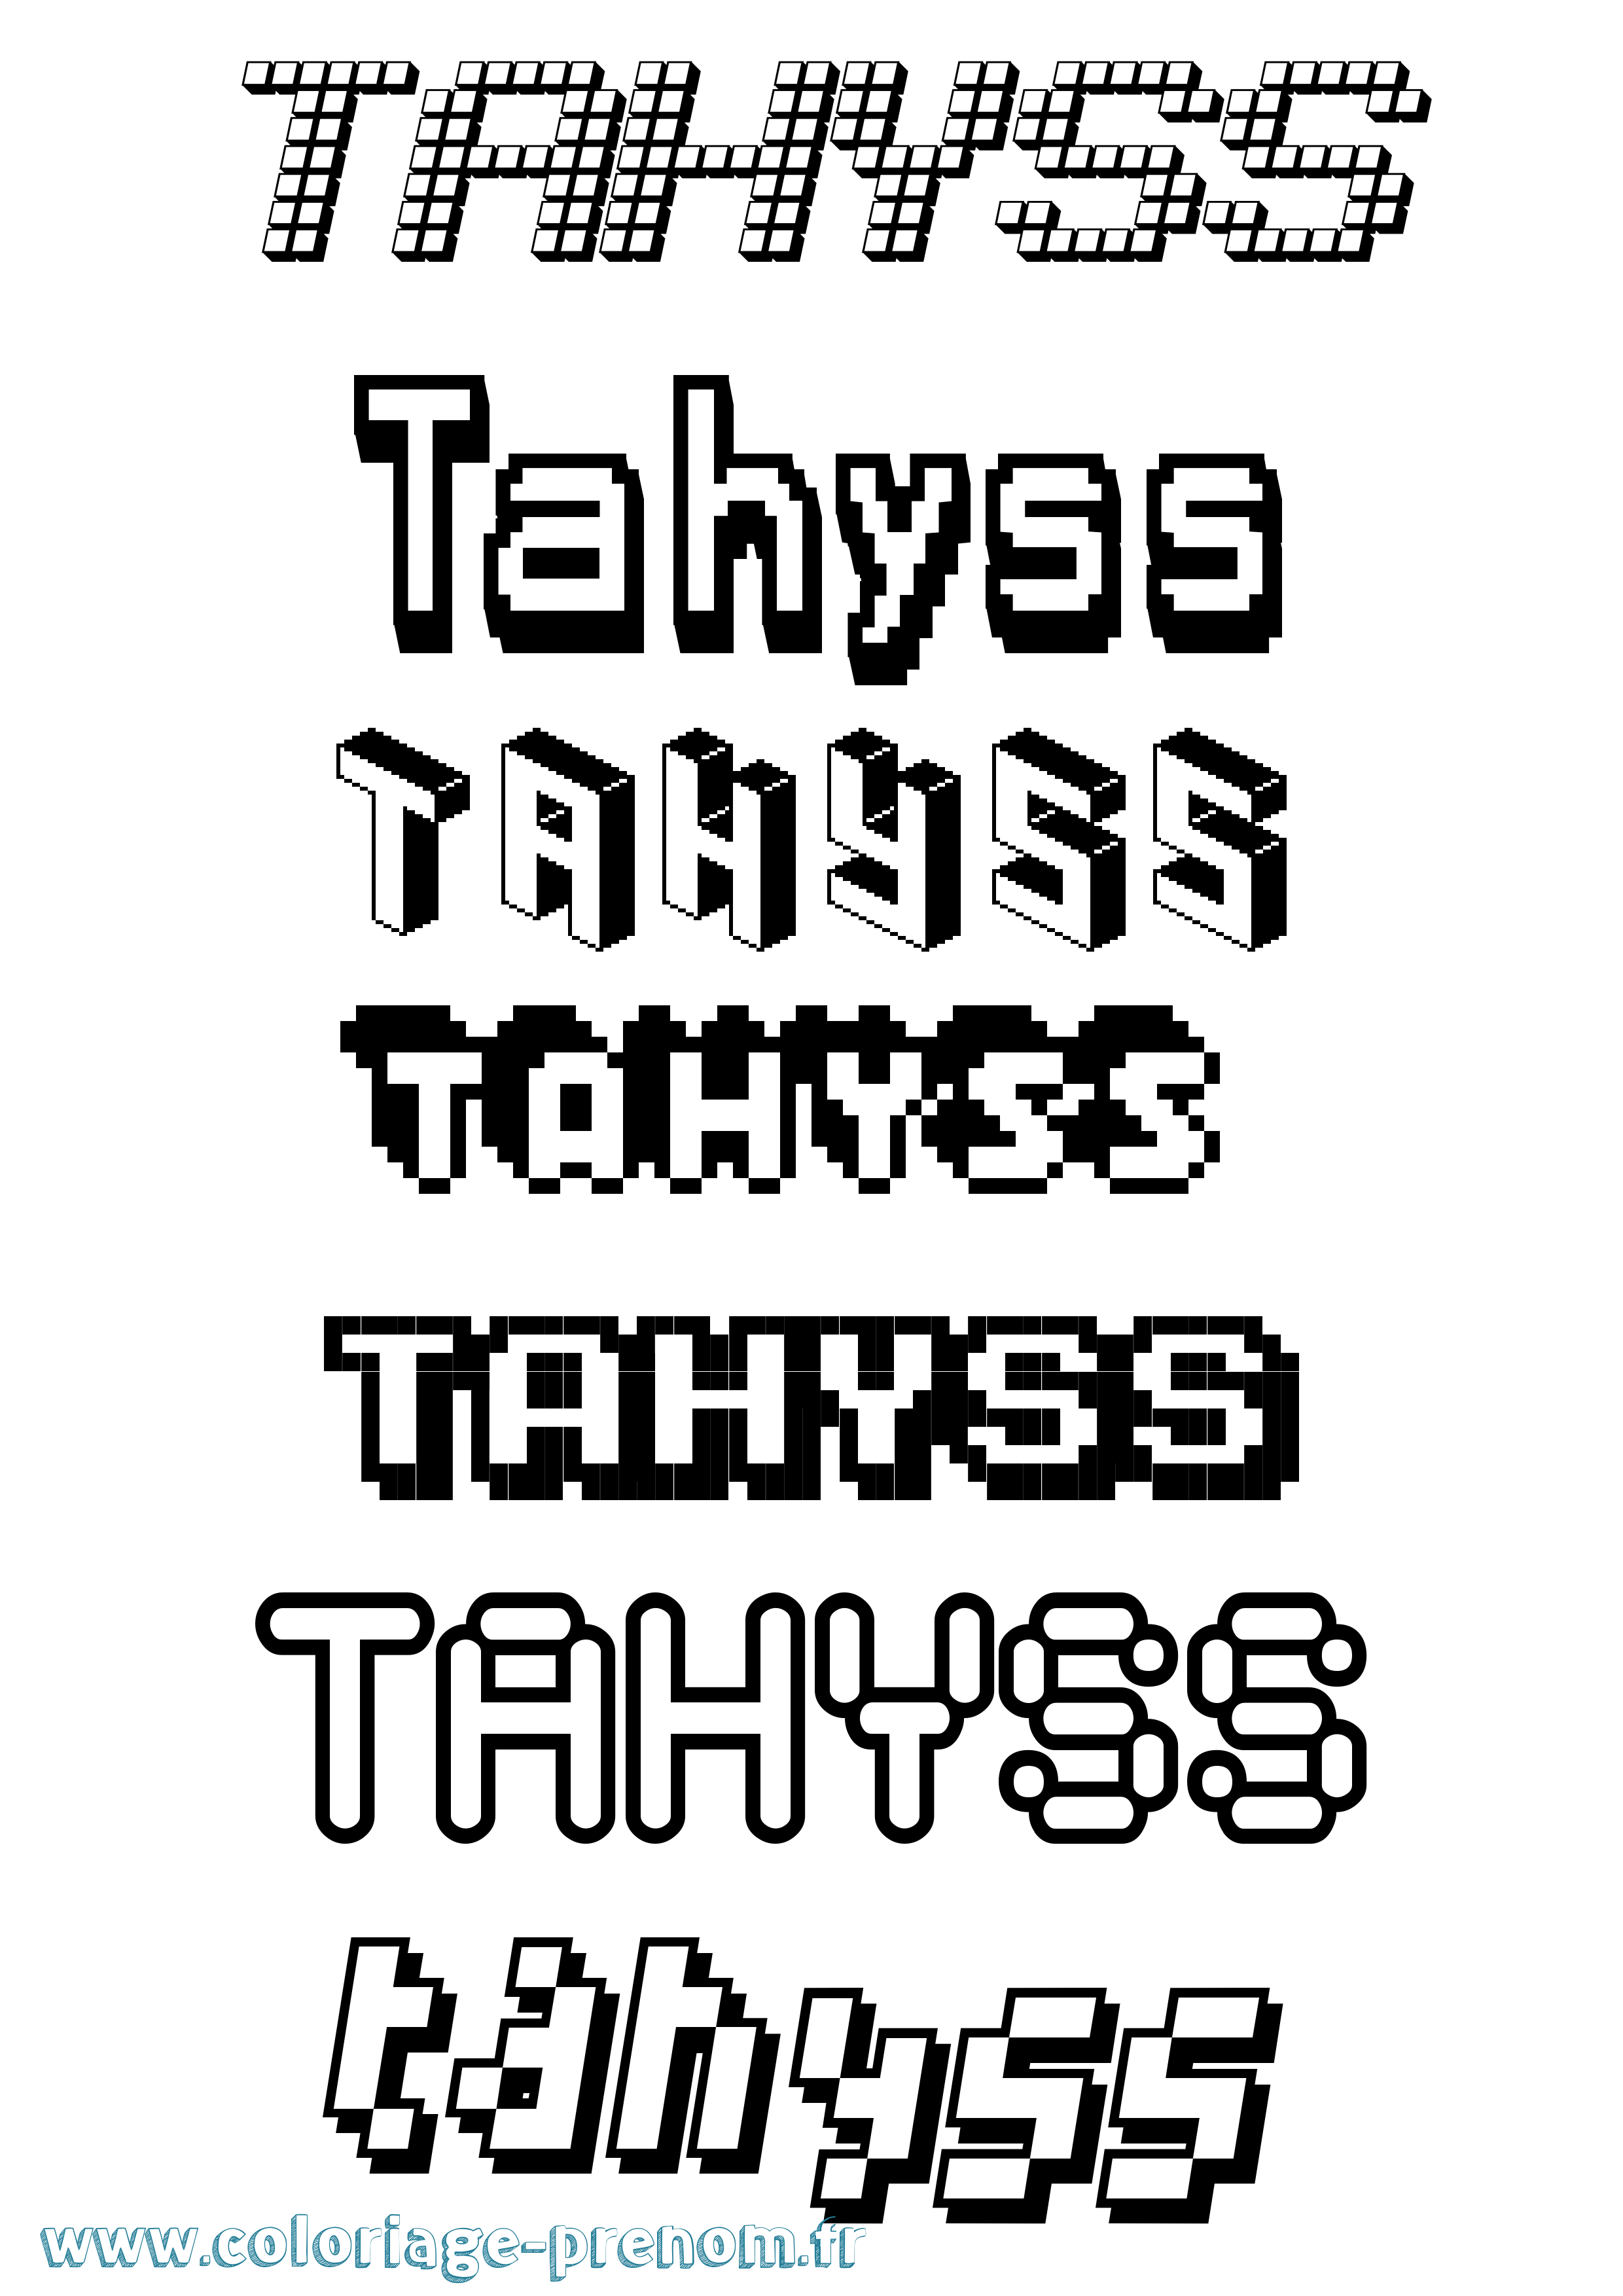 Coloriage prénom Tahyss Pixel